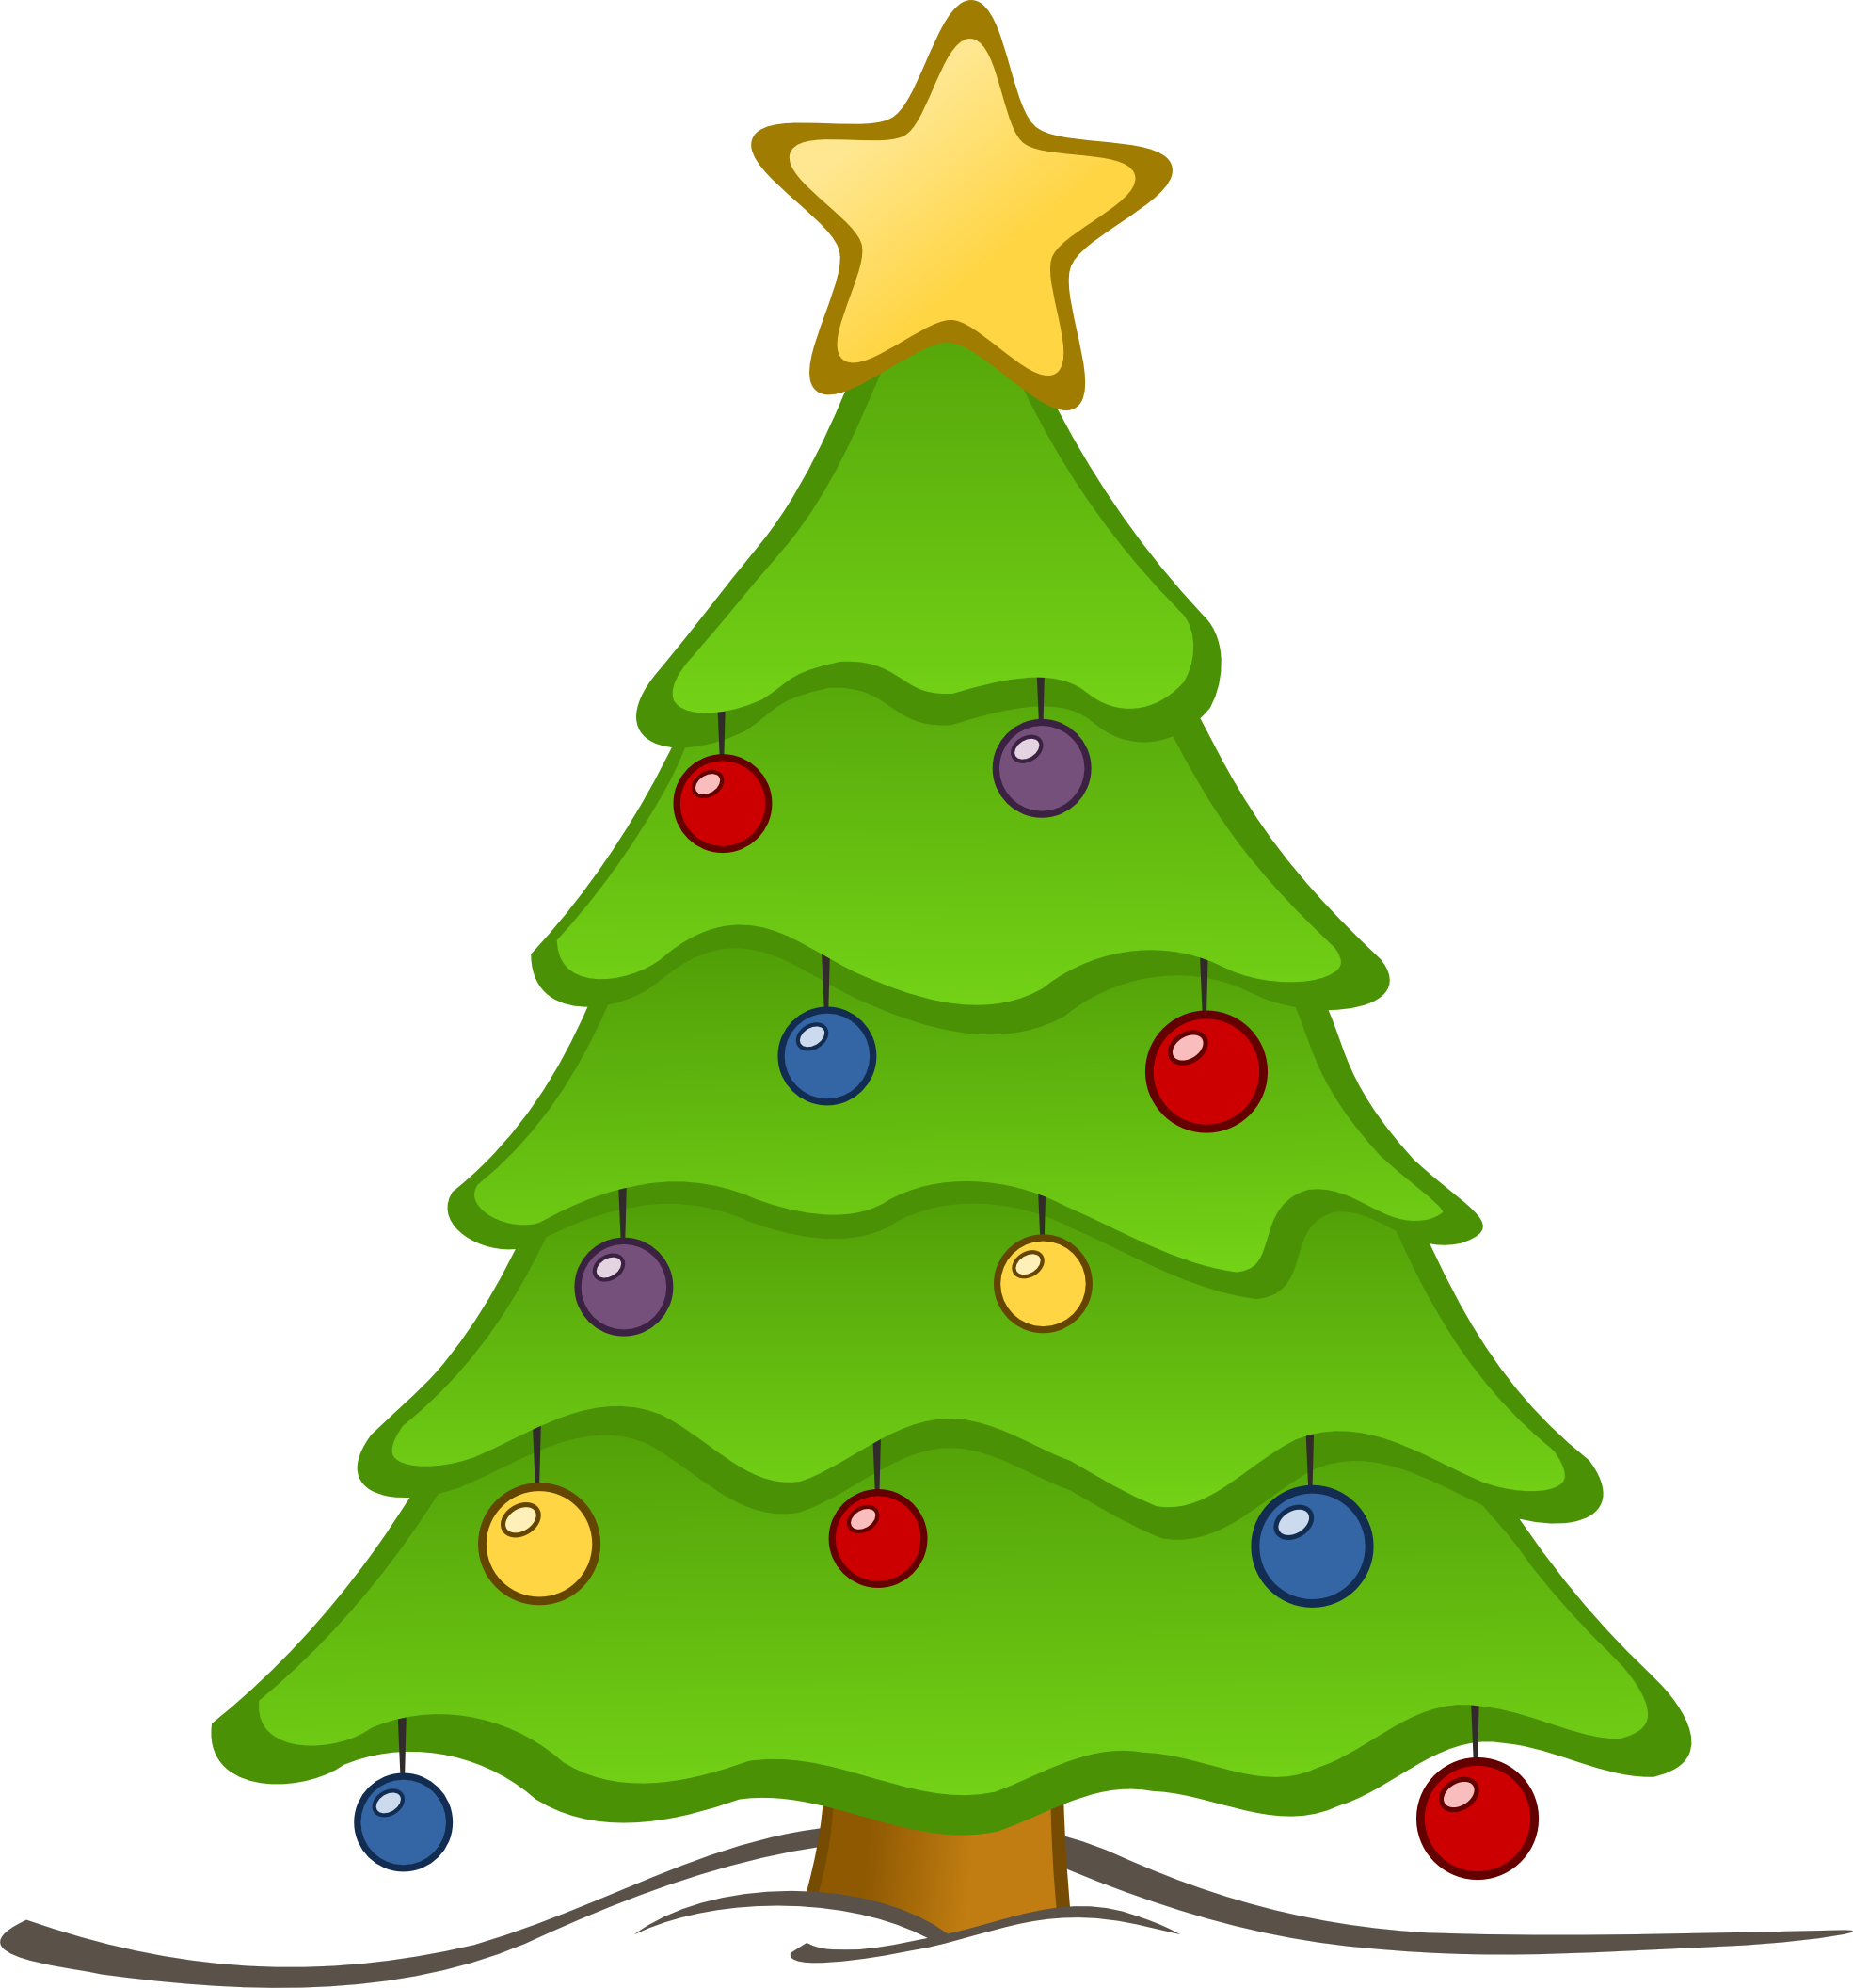 Christmas tree logo clipart